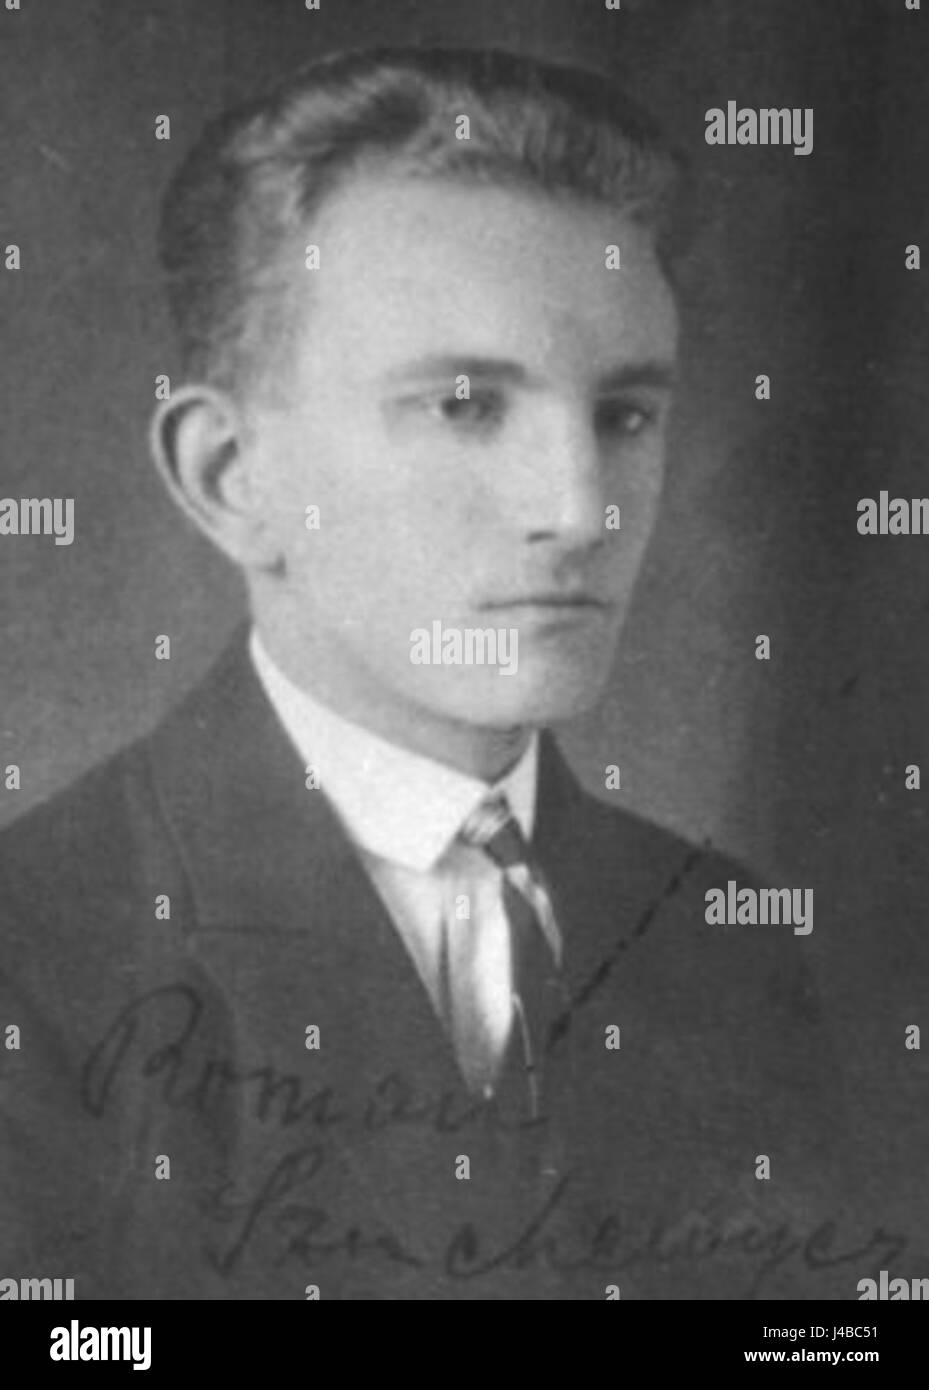 Roman Shukhevych 1926 Stock Photo - Alamy